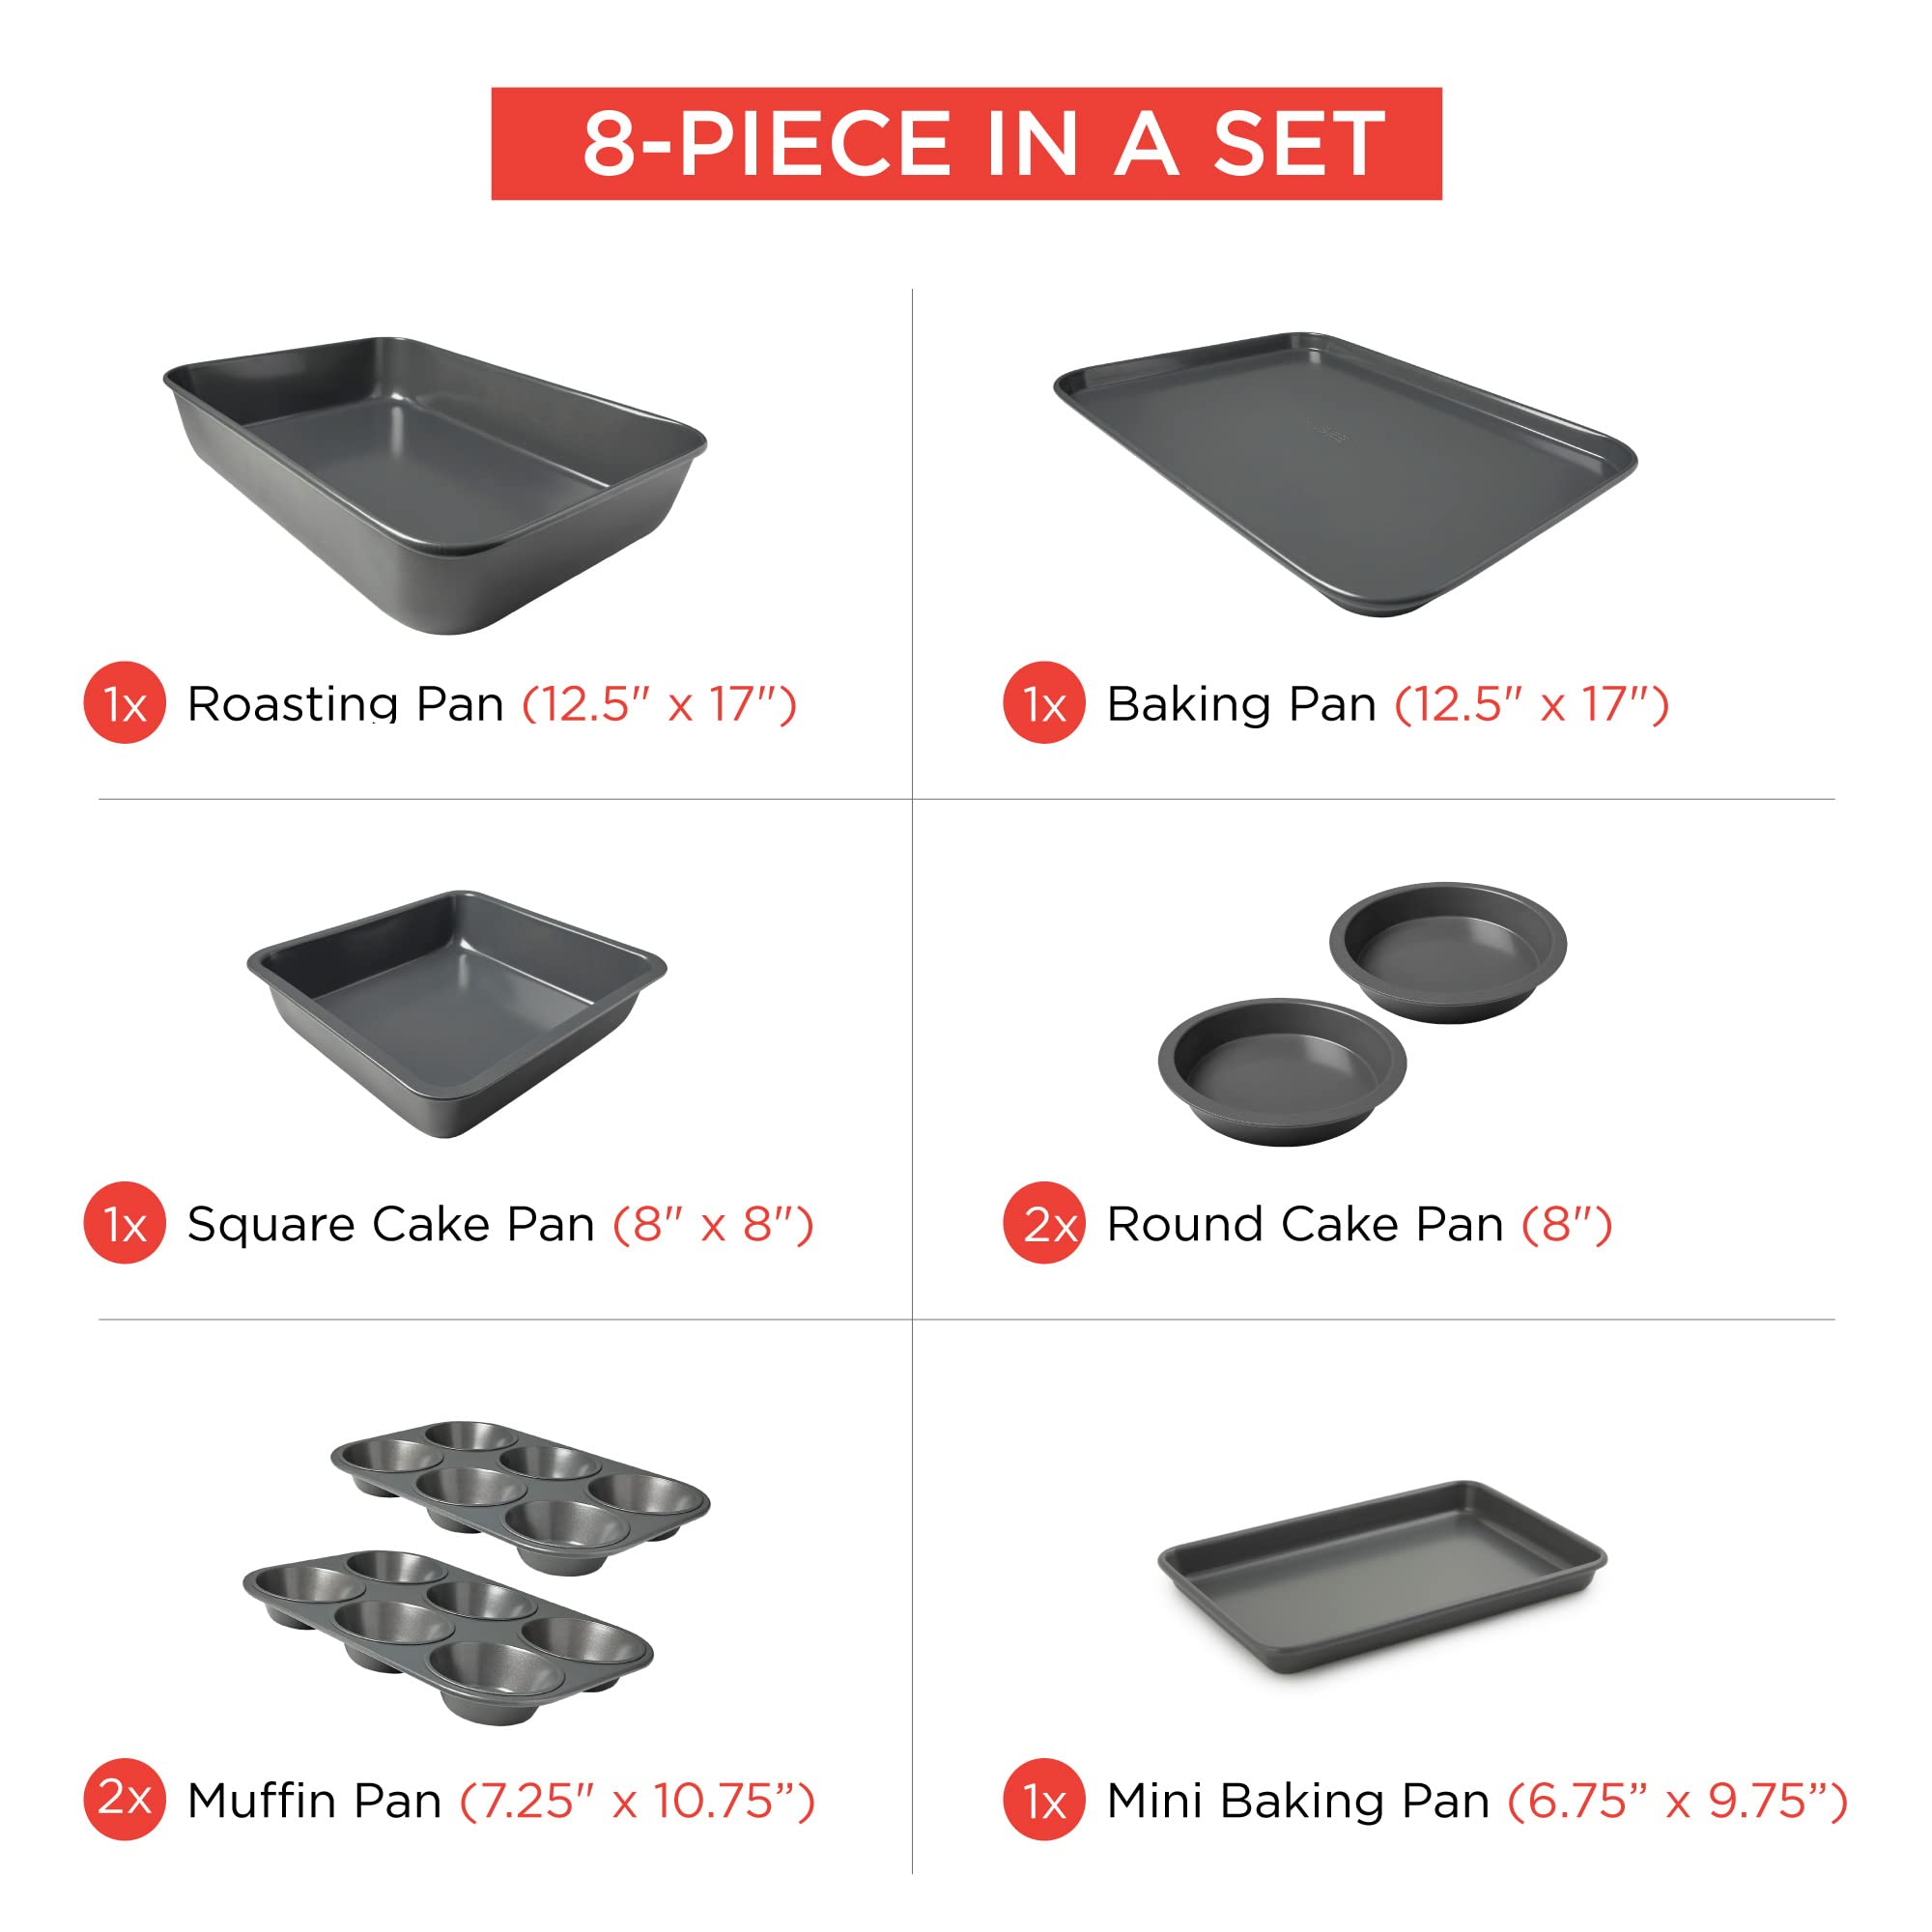 Elbee Home 8-Piece Nonstick Aluminized Steel, Space Saving Baking Set , With Deep Roasting Pan, Cookie Sheet, Cake Pans, Muffin Pans and Baking Pan PFOA & PFOS Free